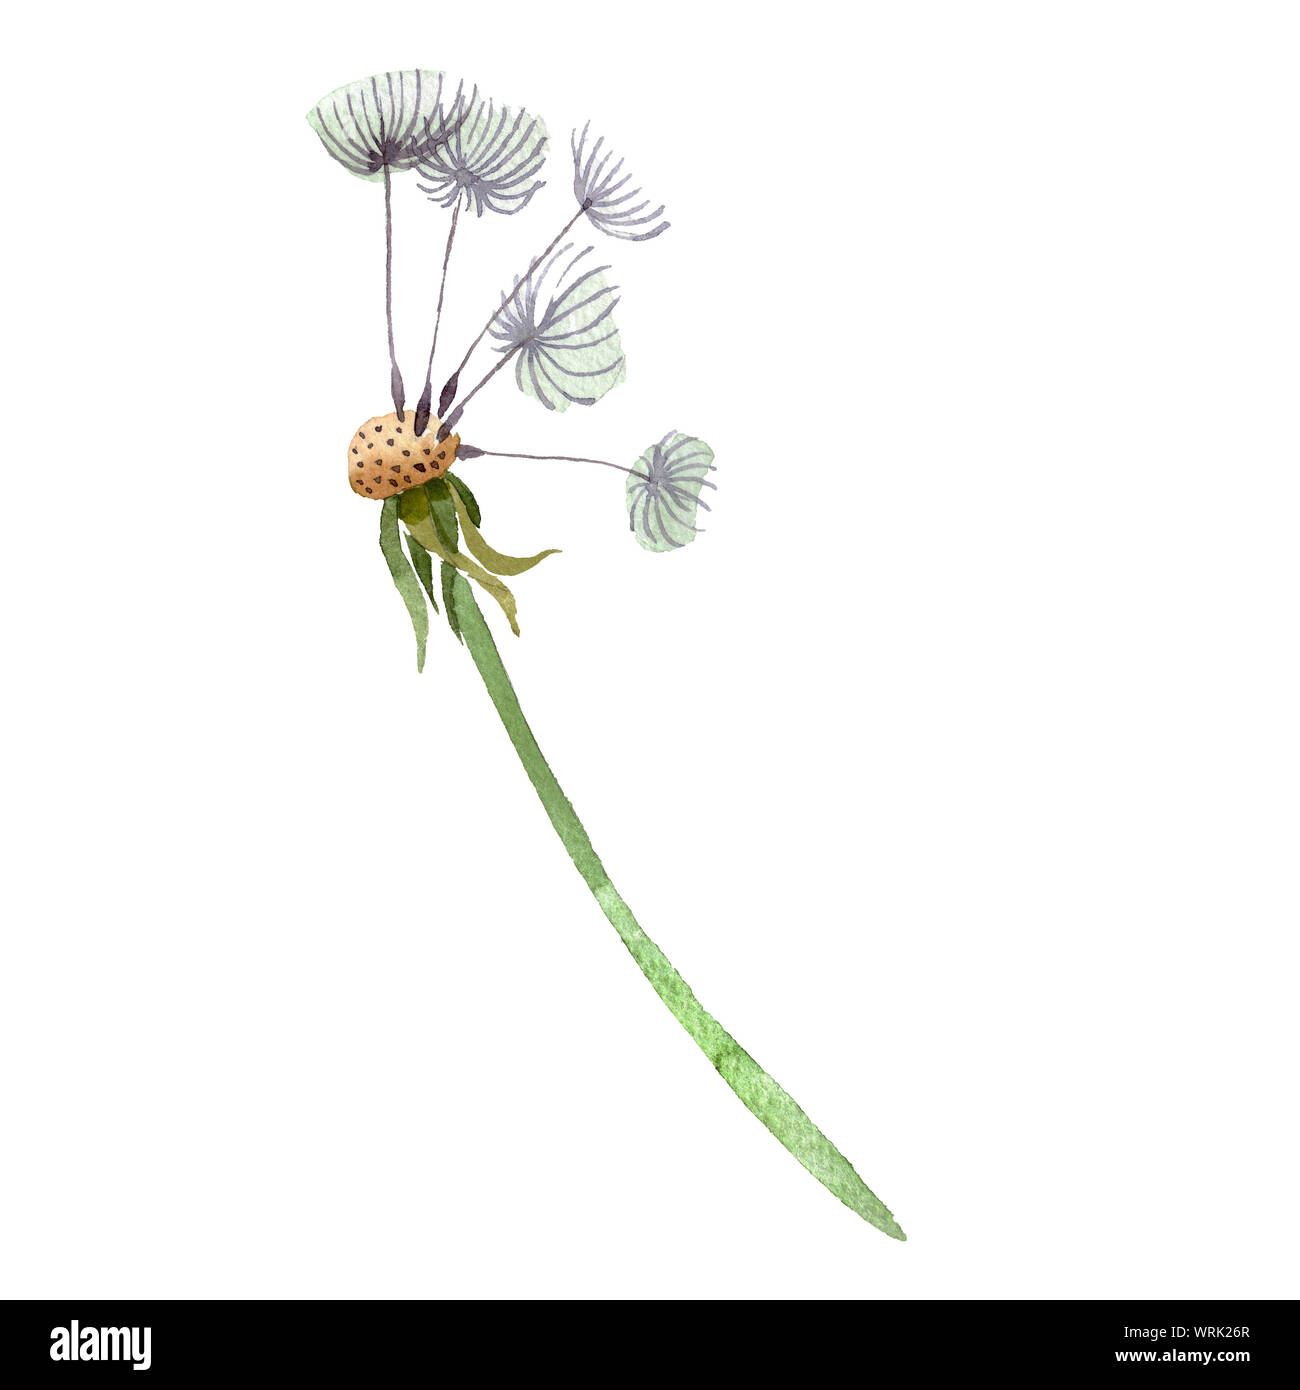 Dandelion seedhead with seeds. Watercolor background illustration set. Isolated plant illustration element. Stock Photo